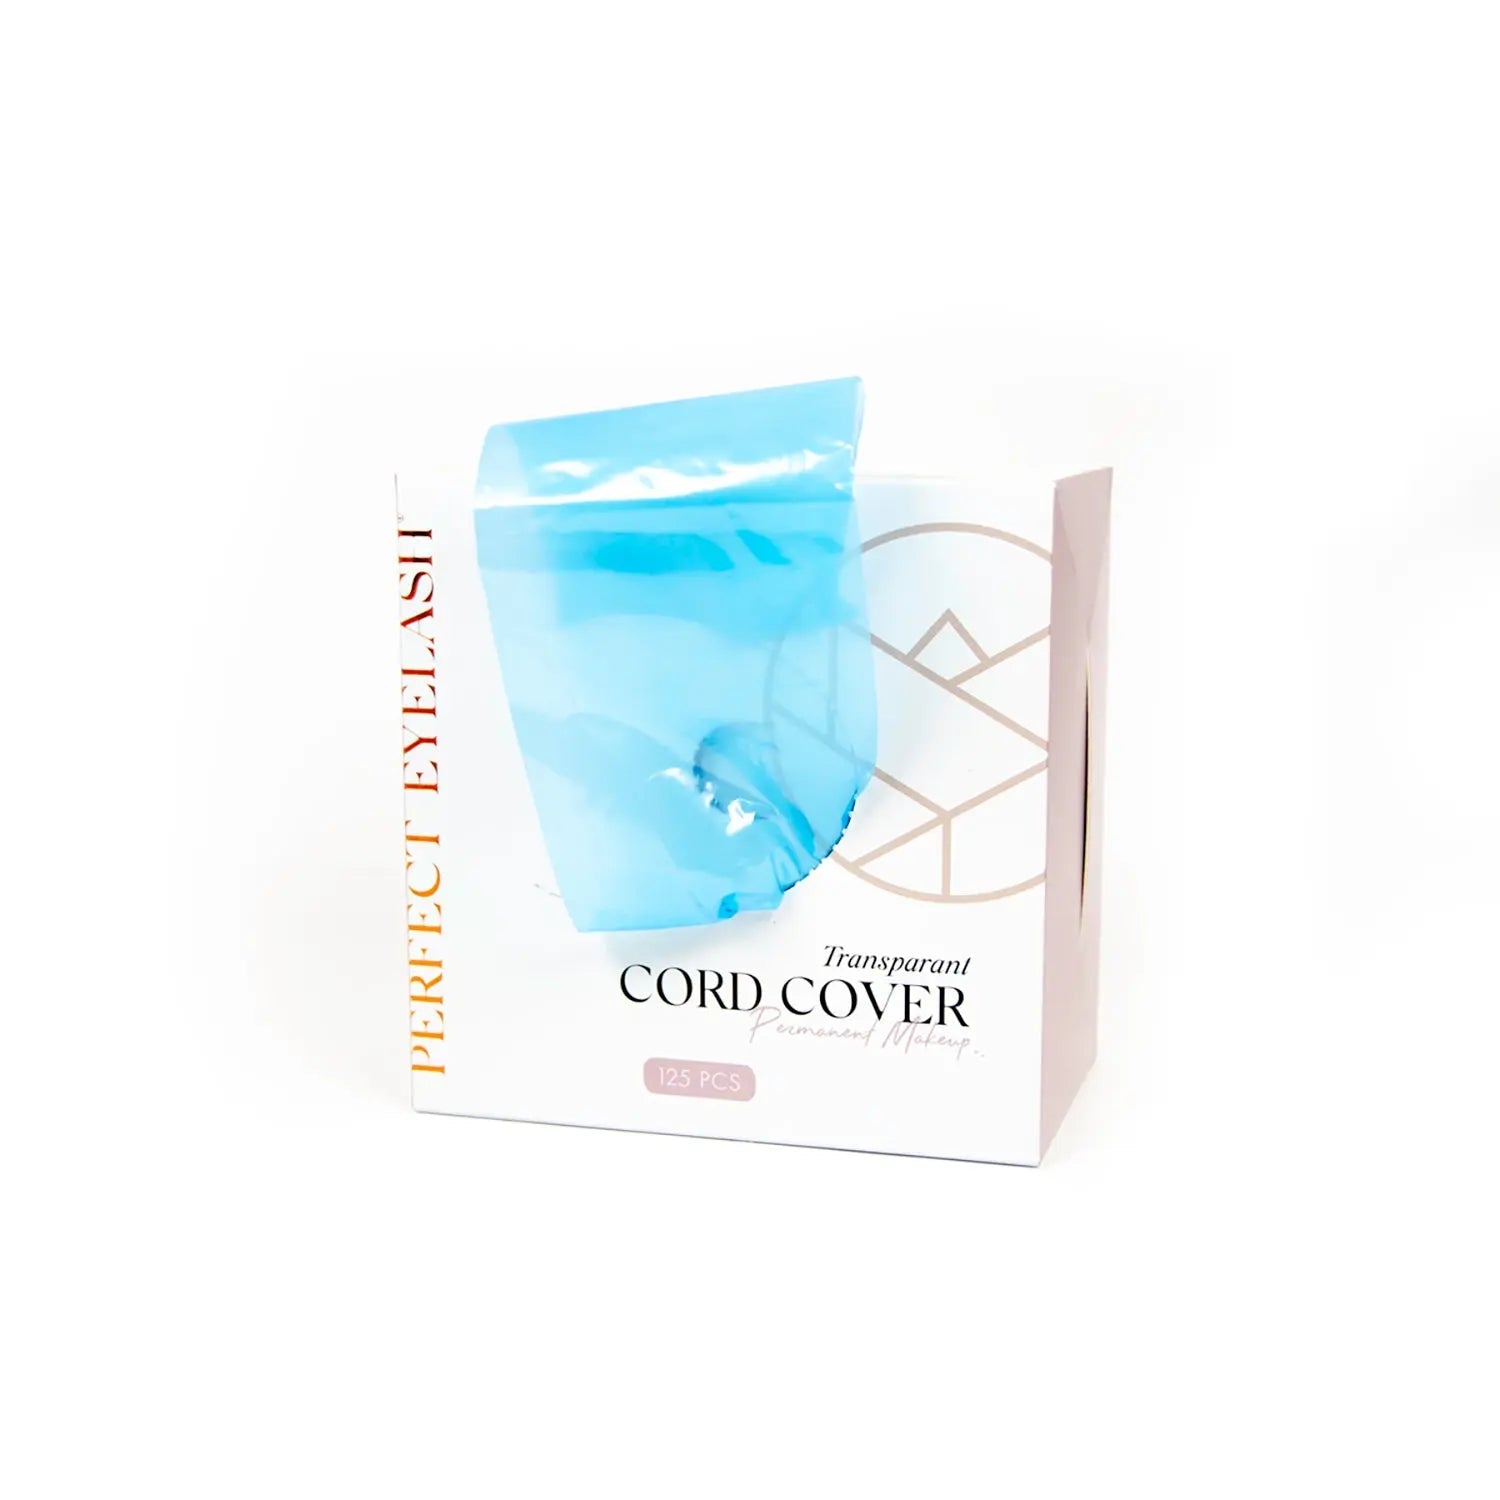 PE Cosmetics PMU Cord Cover (125 pcs)